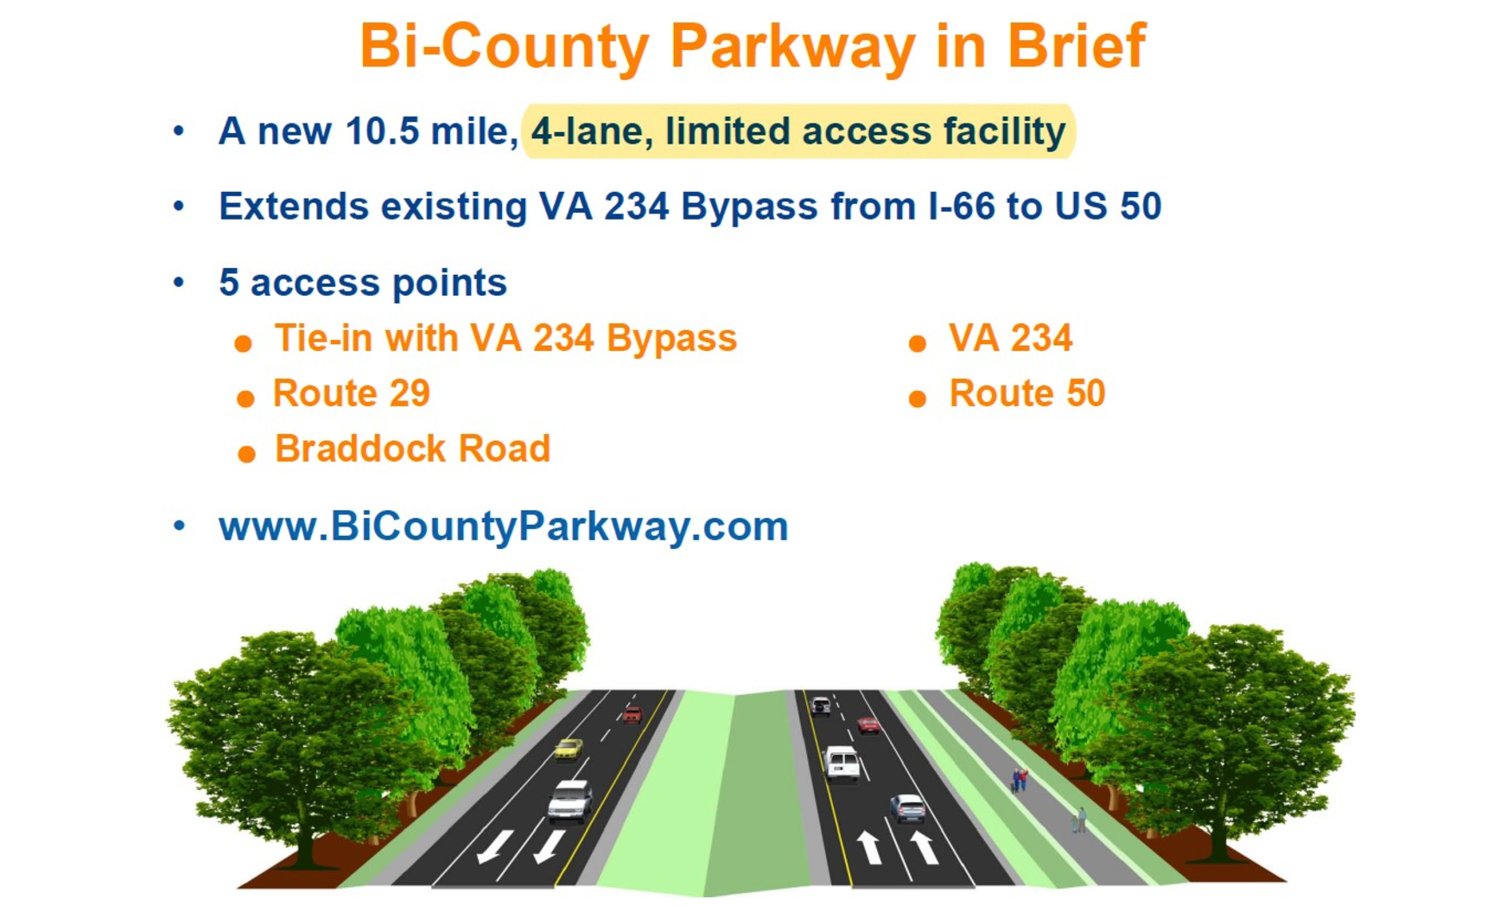 VDOT's previous BiCounty Parkway materials. Website is no longer active.